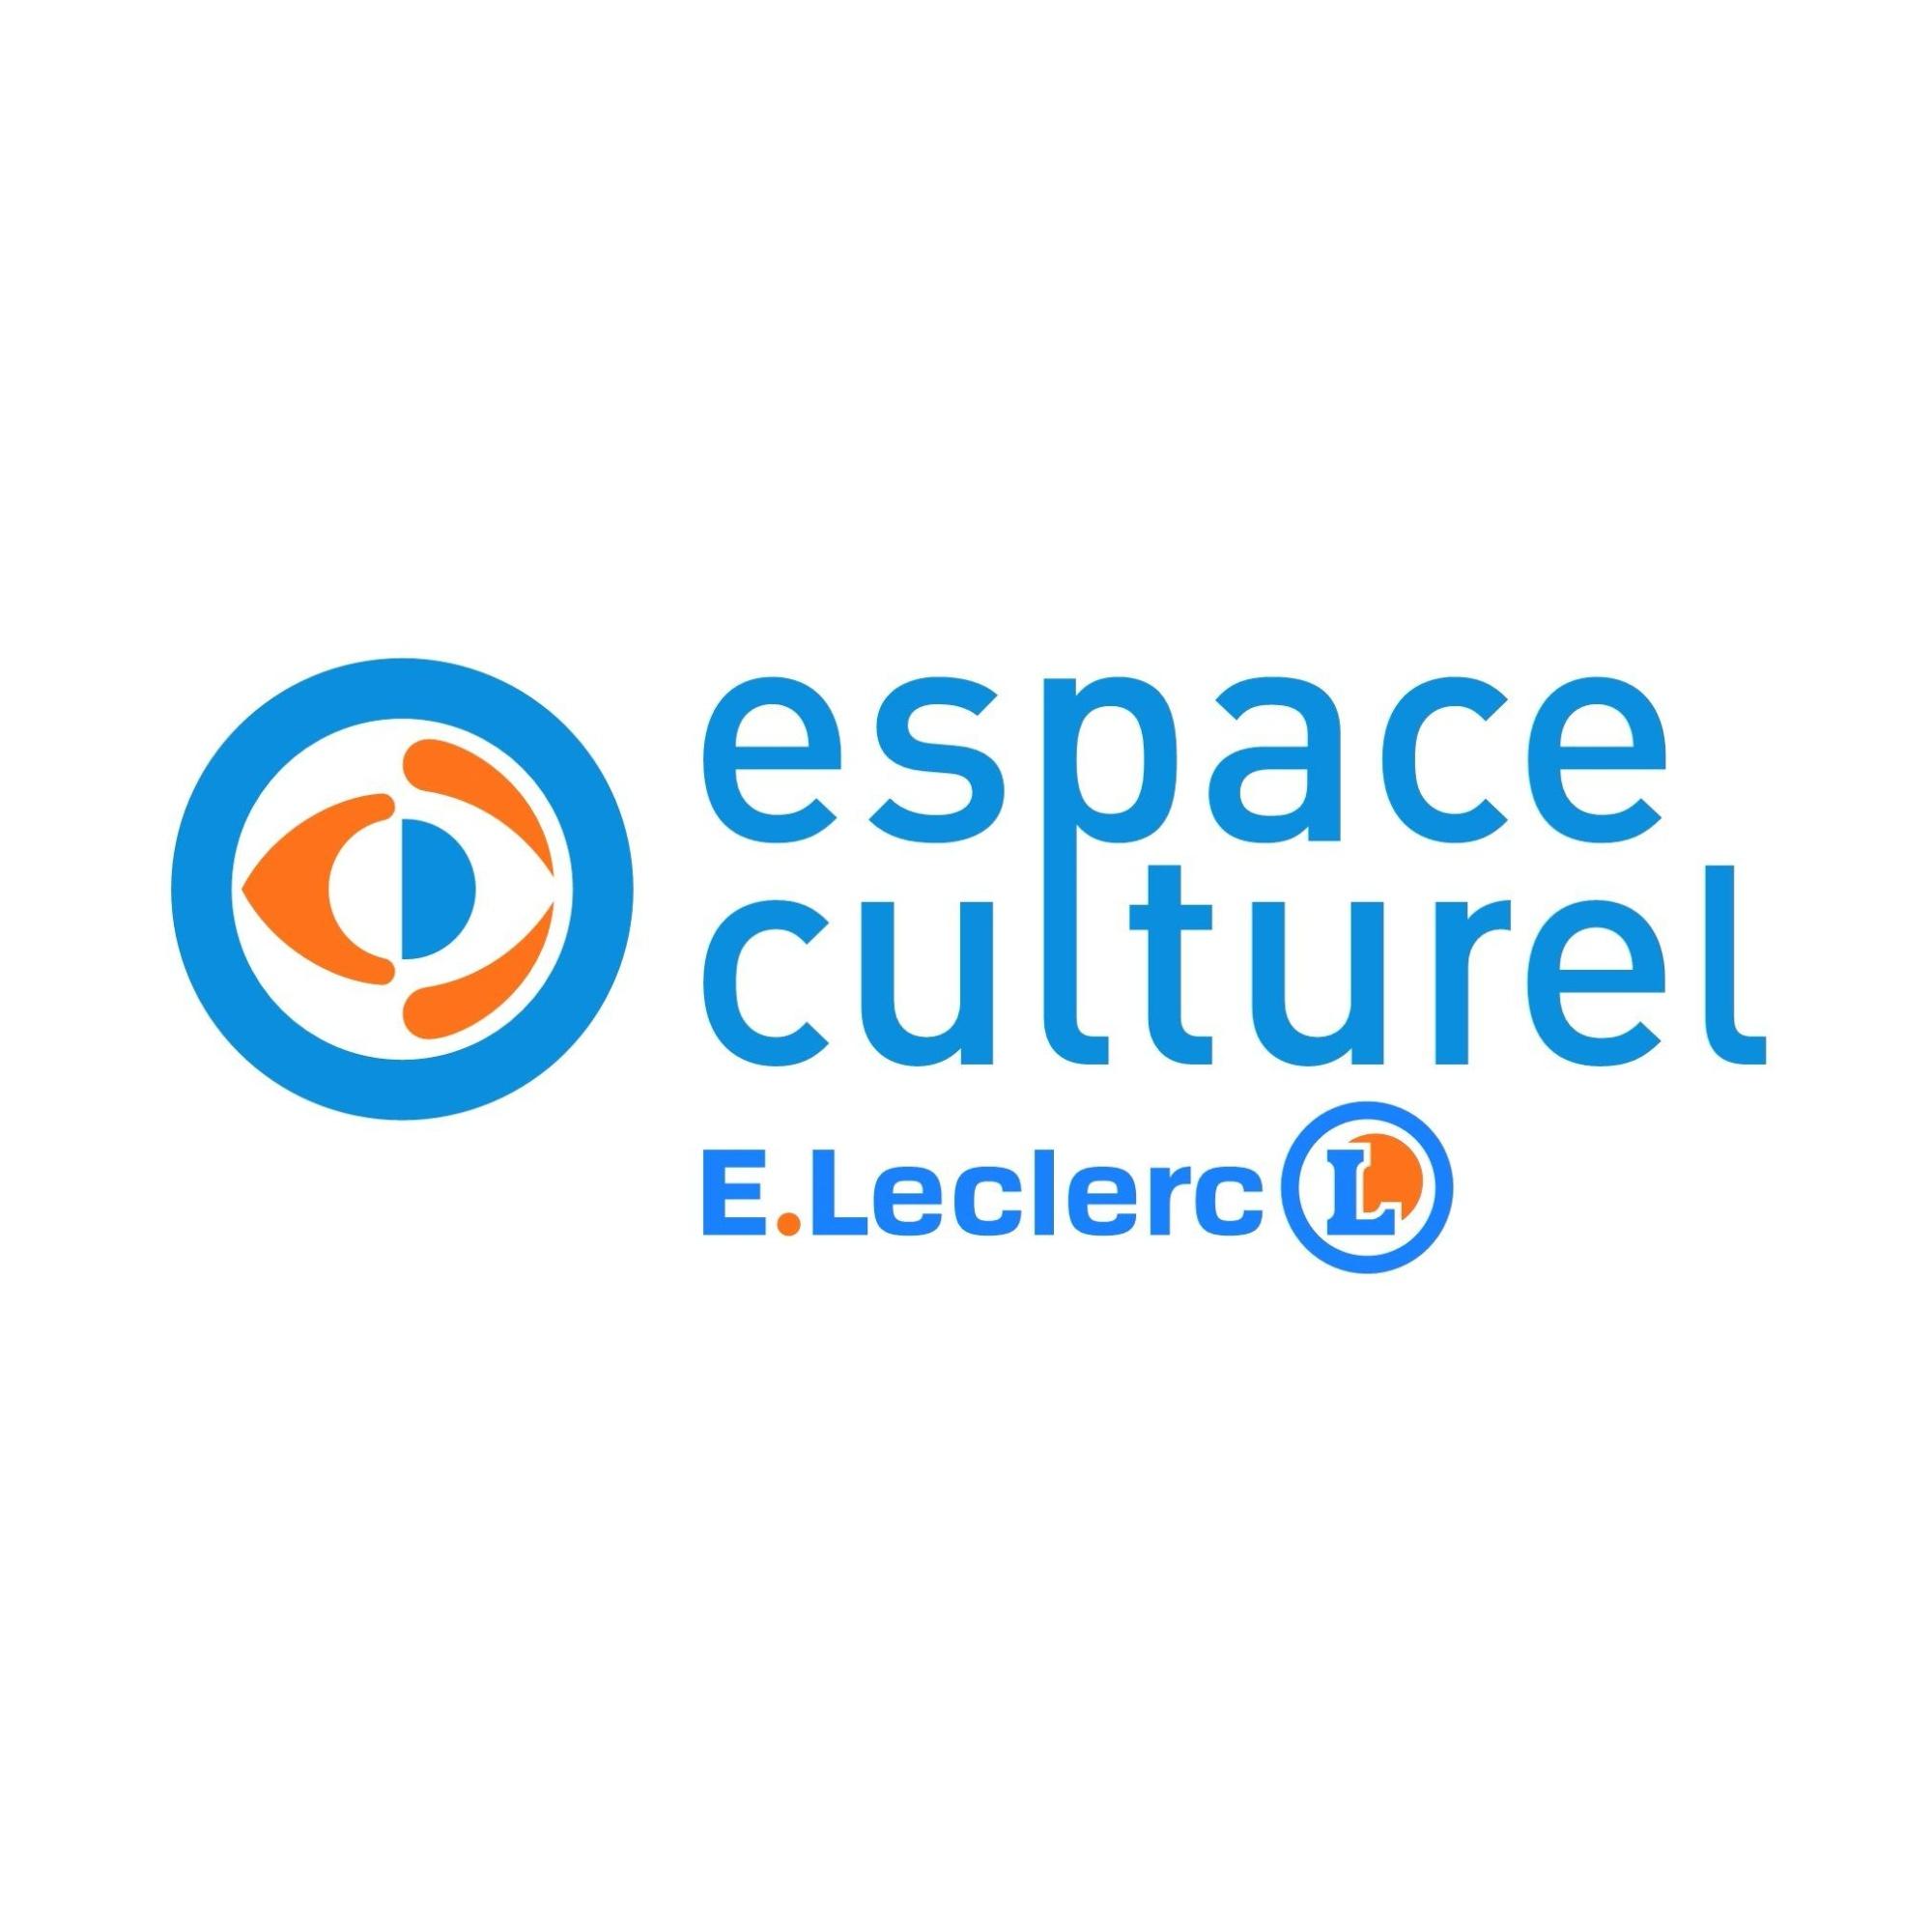 E.leclerc Espace Culturel Verdun